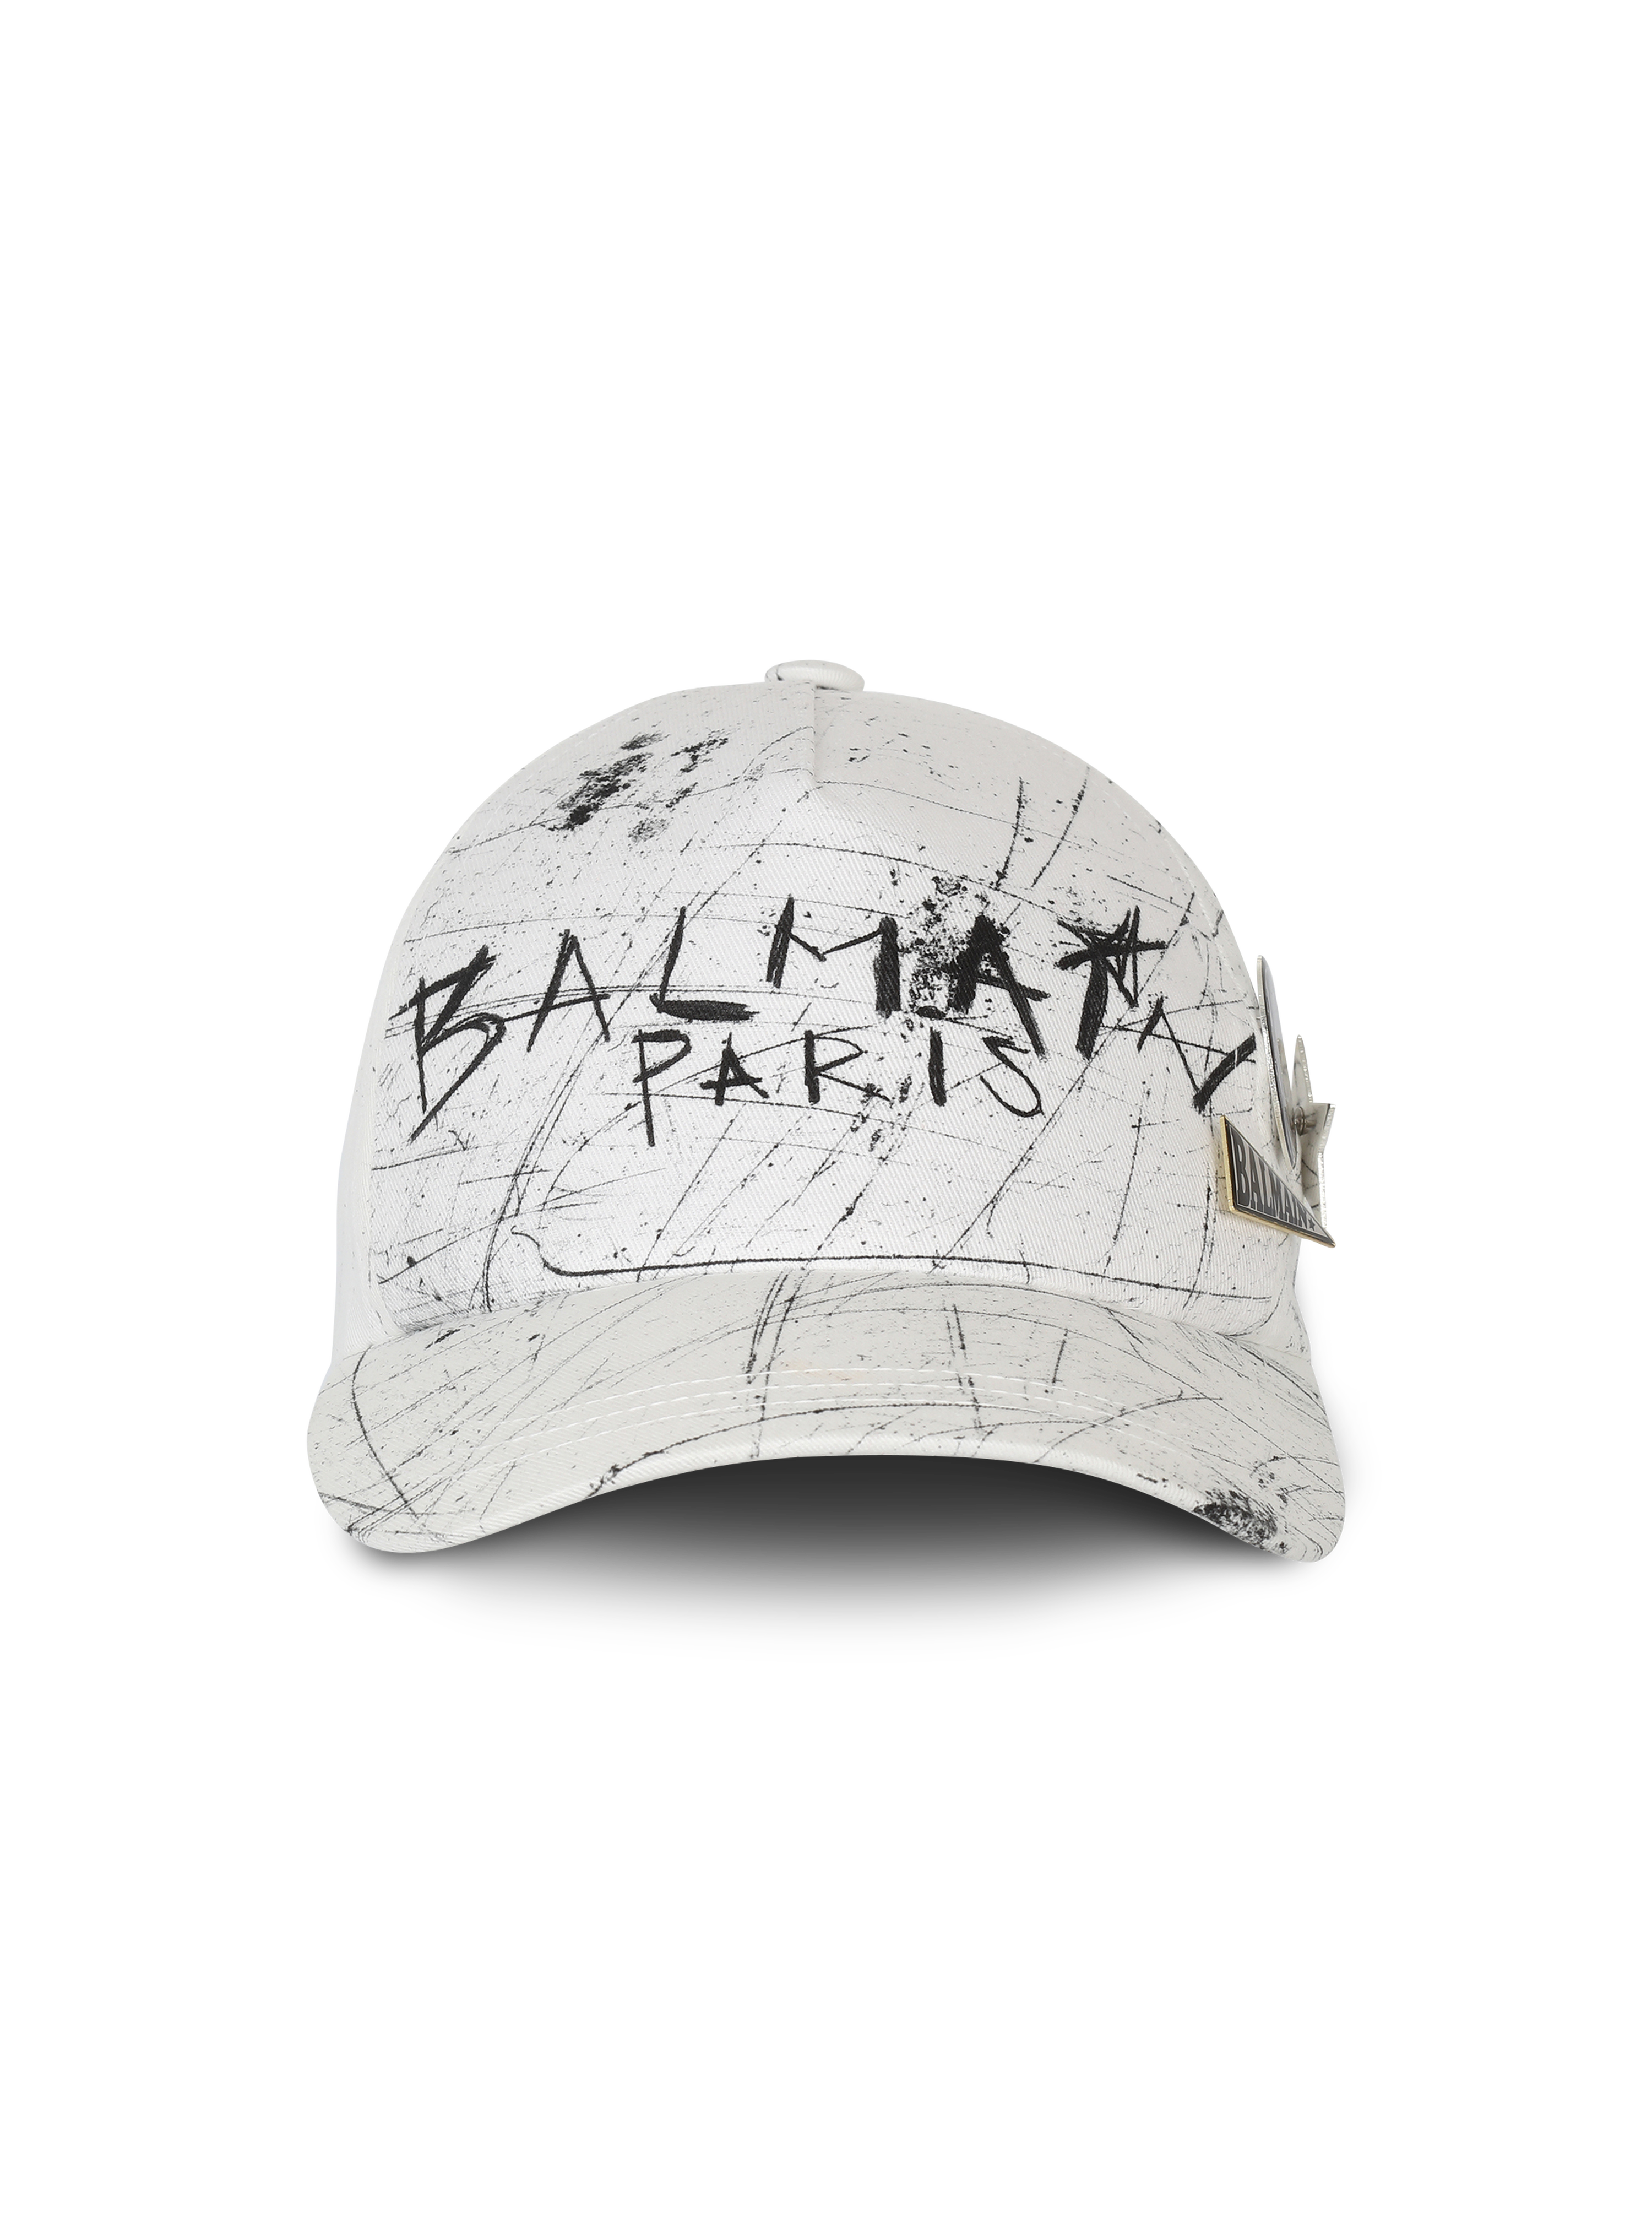 Gorra de algodón con el logotipo de Balmain tipo grafiti, blanco